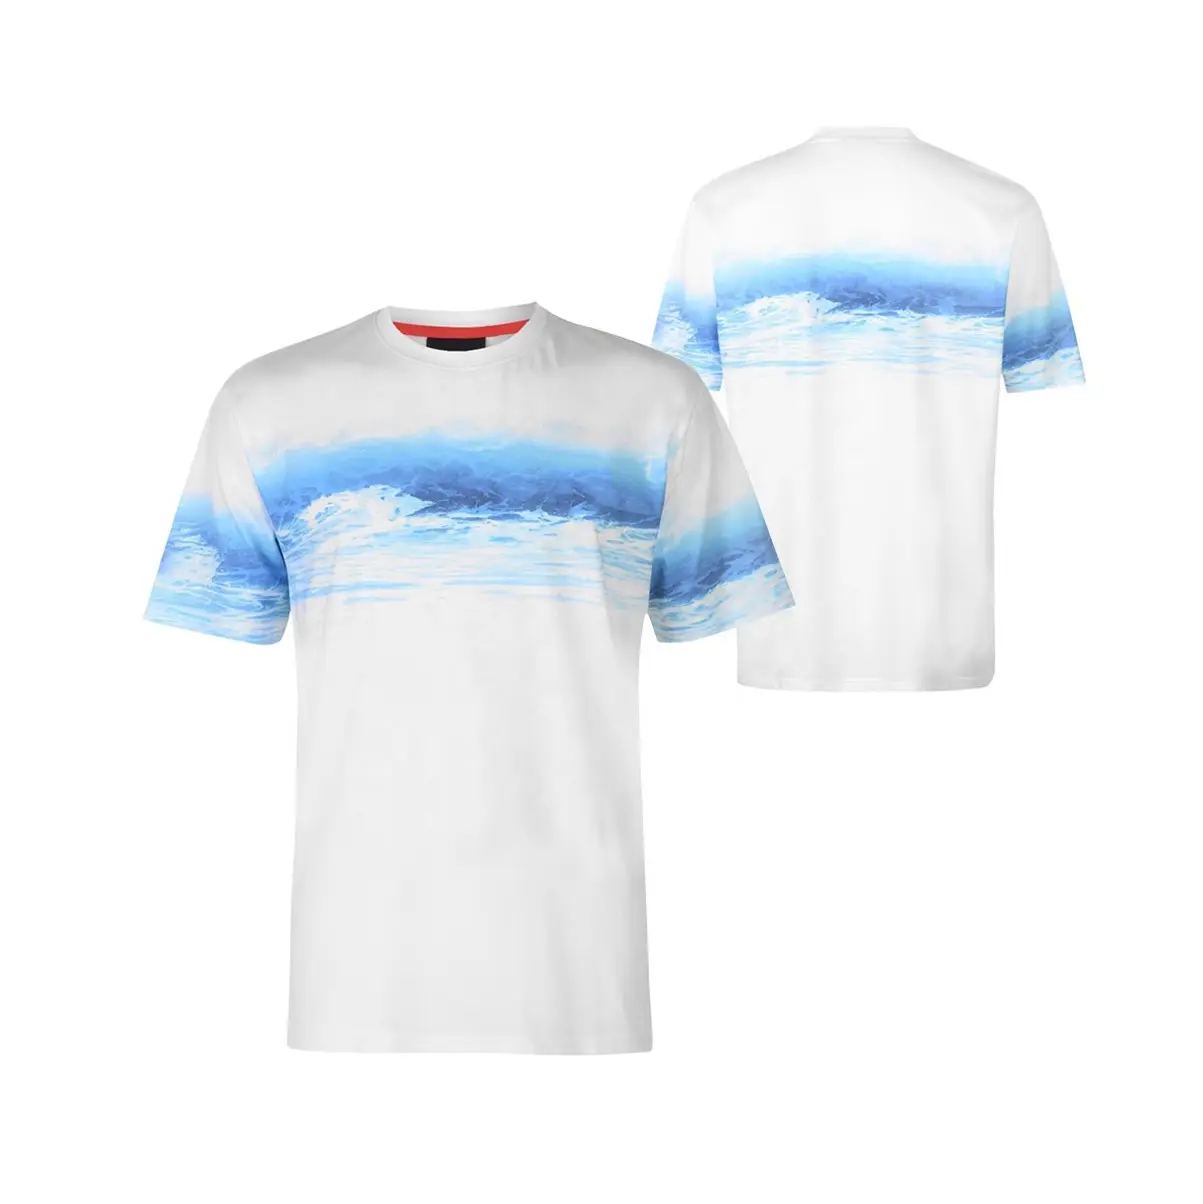 ओम उच्च गुणवत्ता अनुकूलित सबलिमिनेशन टी शर्ट 100% पॉलिएस्टर कपास निर्यात उन्मुख सबसे सस्ती मुद्रित कढ़ाई शर्ट